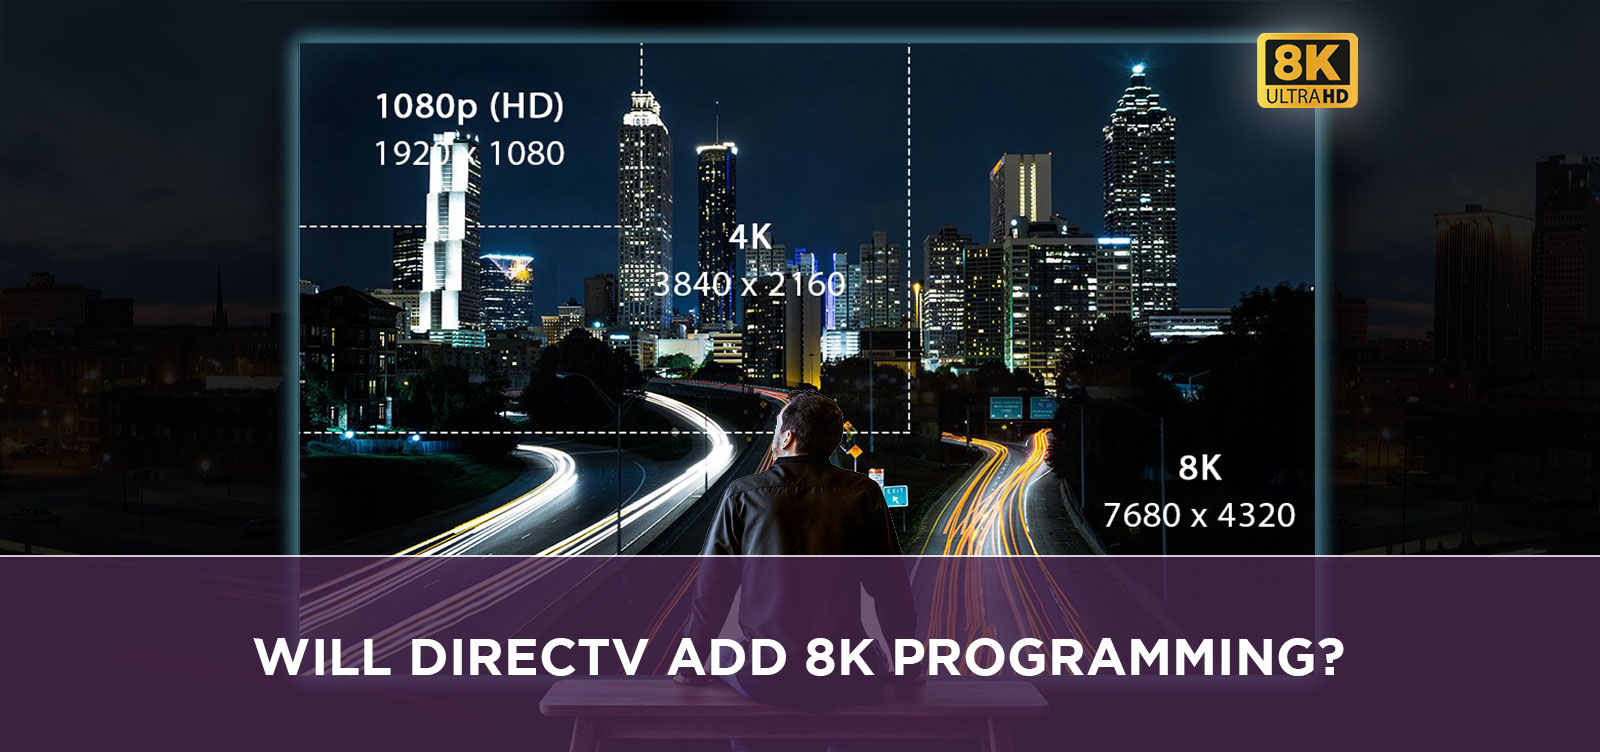 Will DIRECTV add 8K programming?